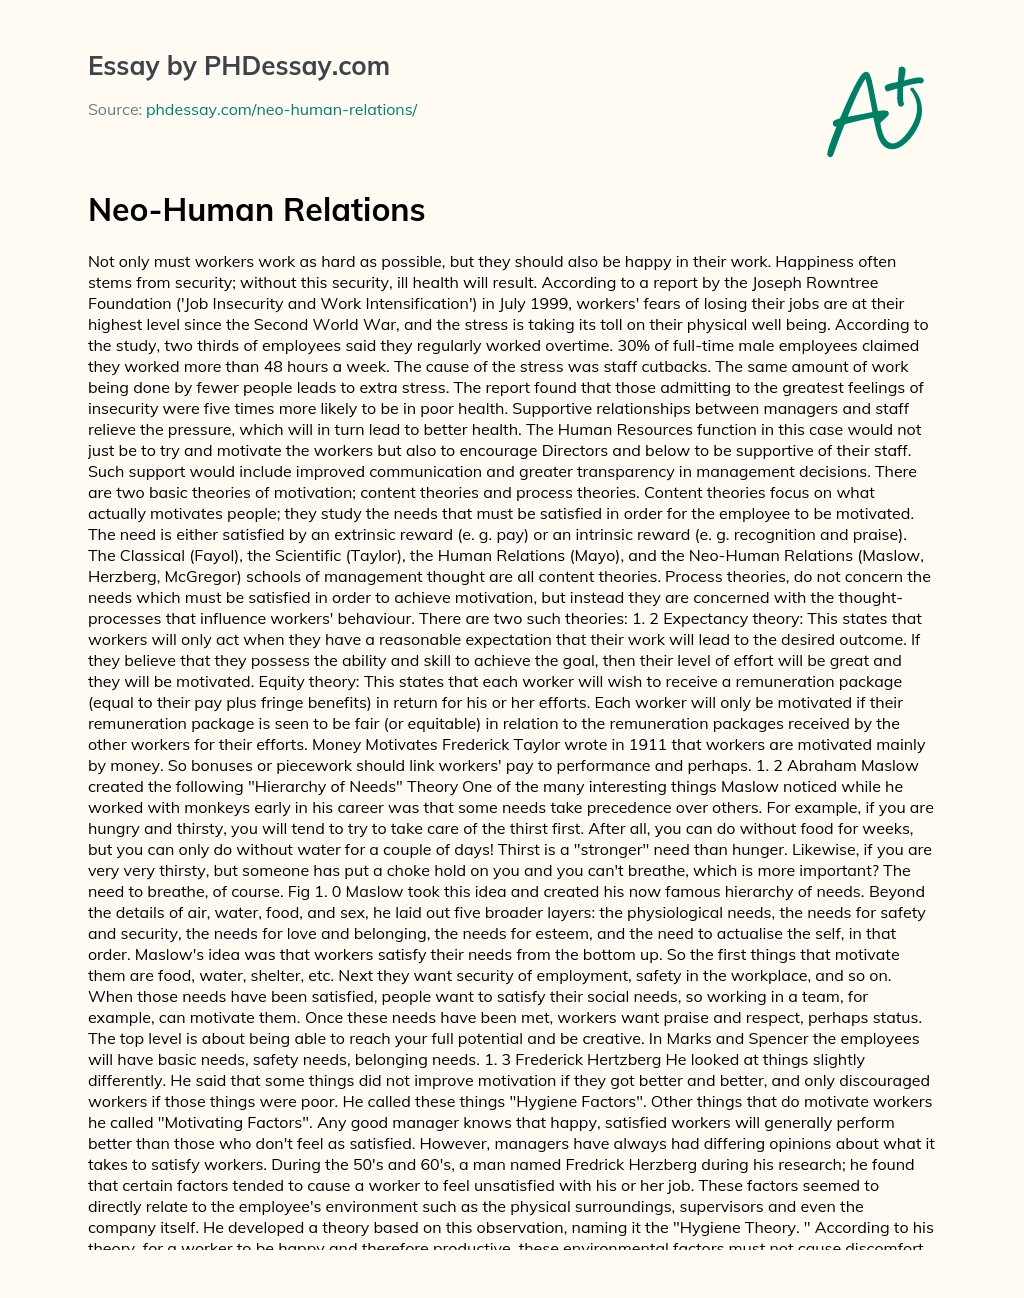 Neo-Human Relations essay